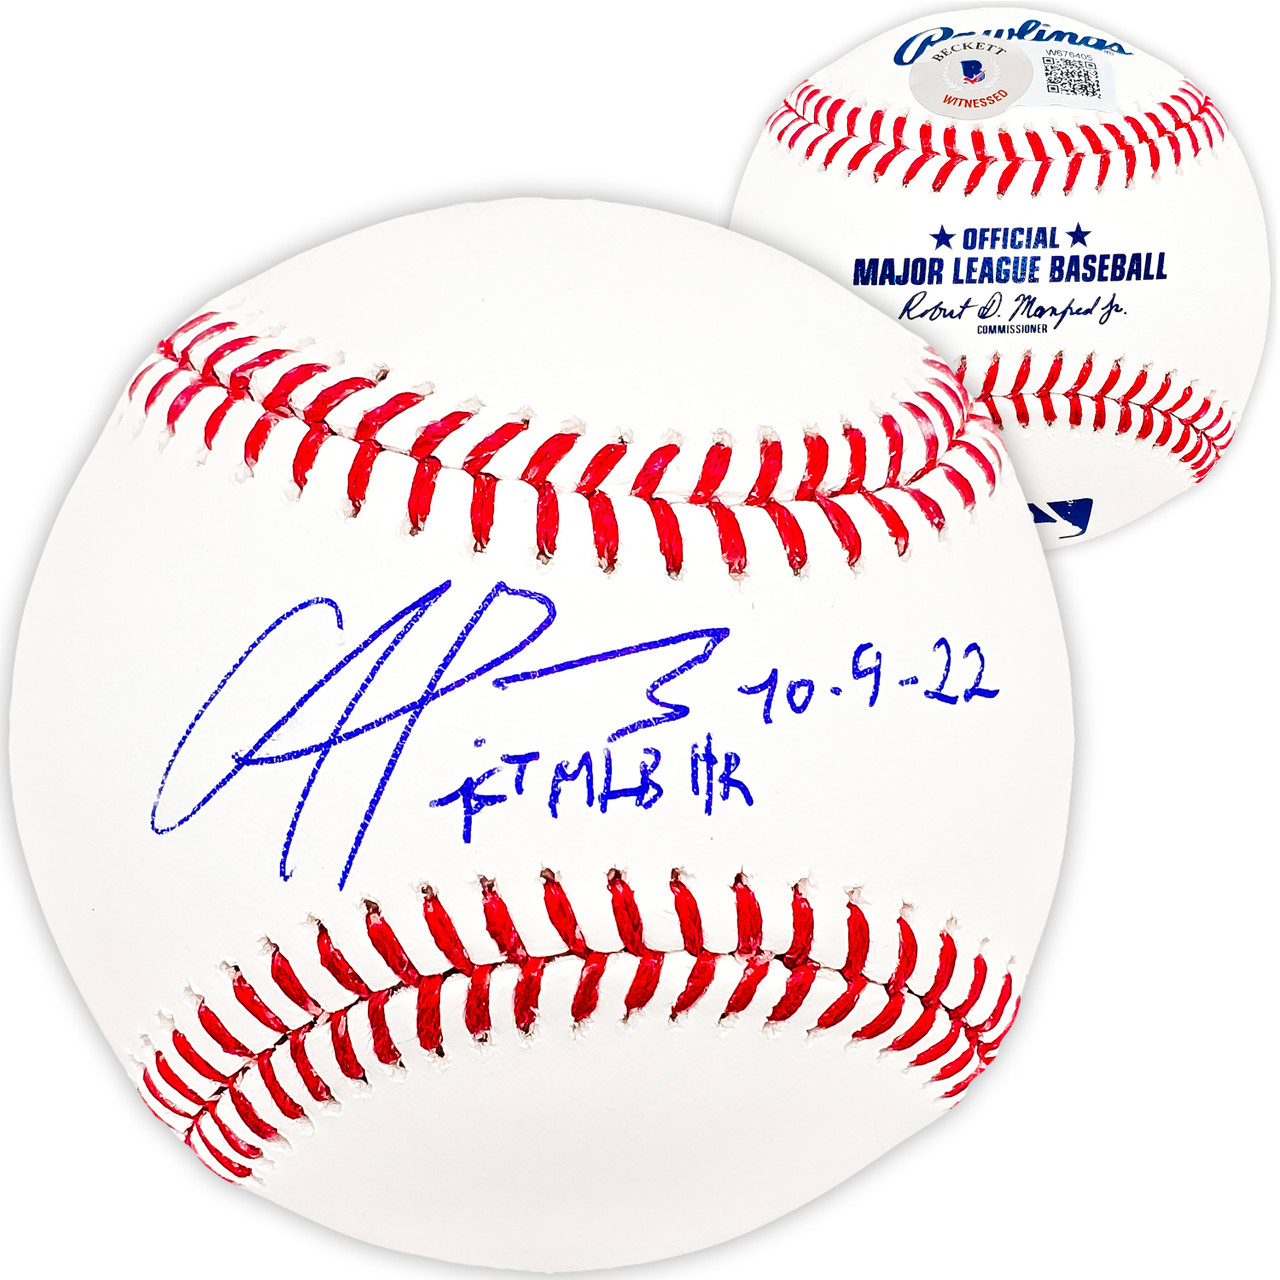 Jackson Holliday Autographed OMLB Baseball with JSA Certificate of